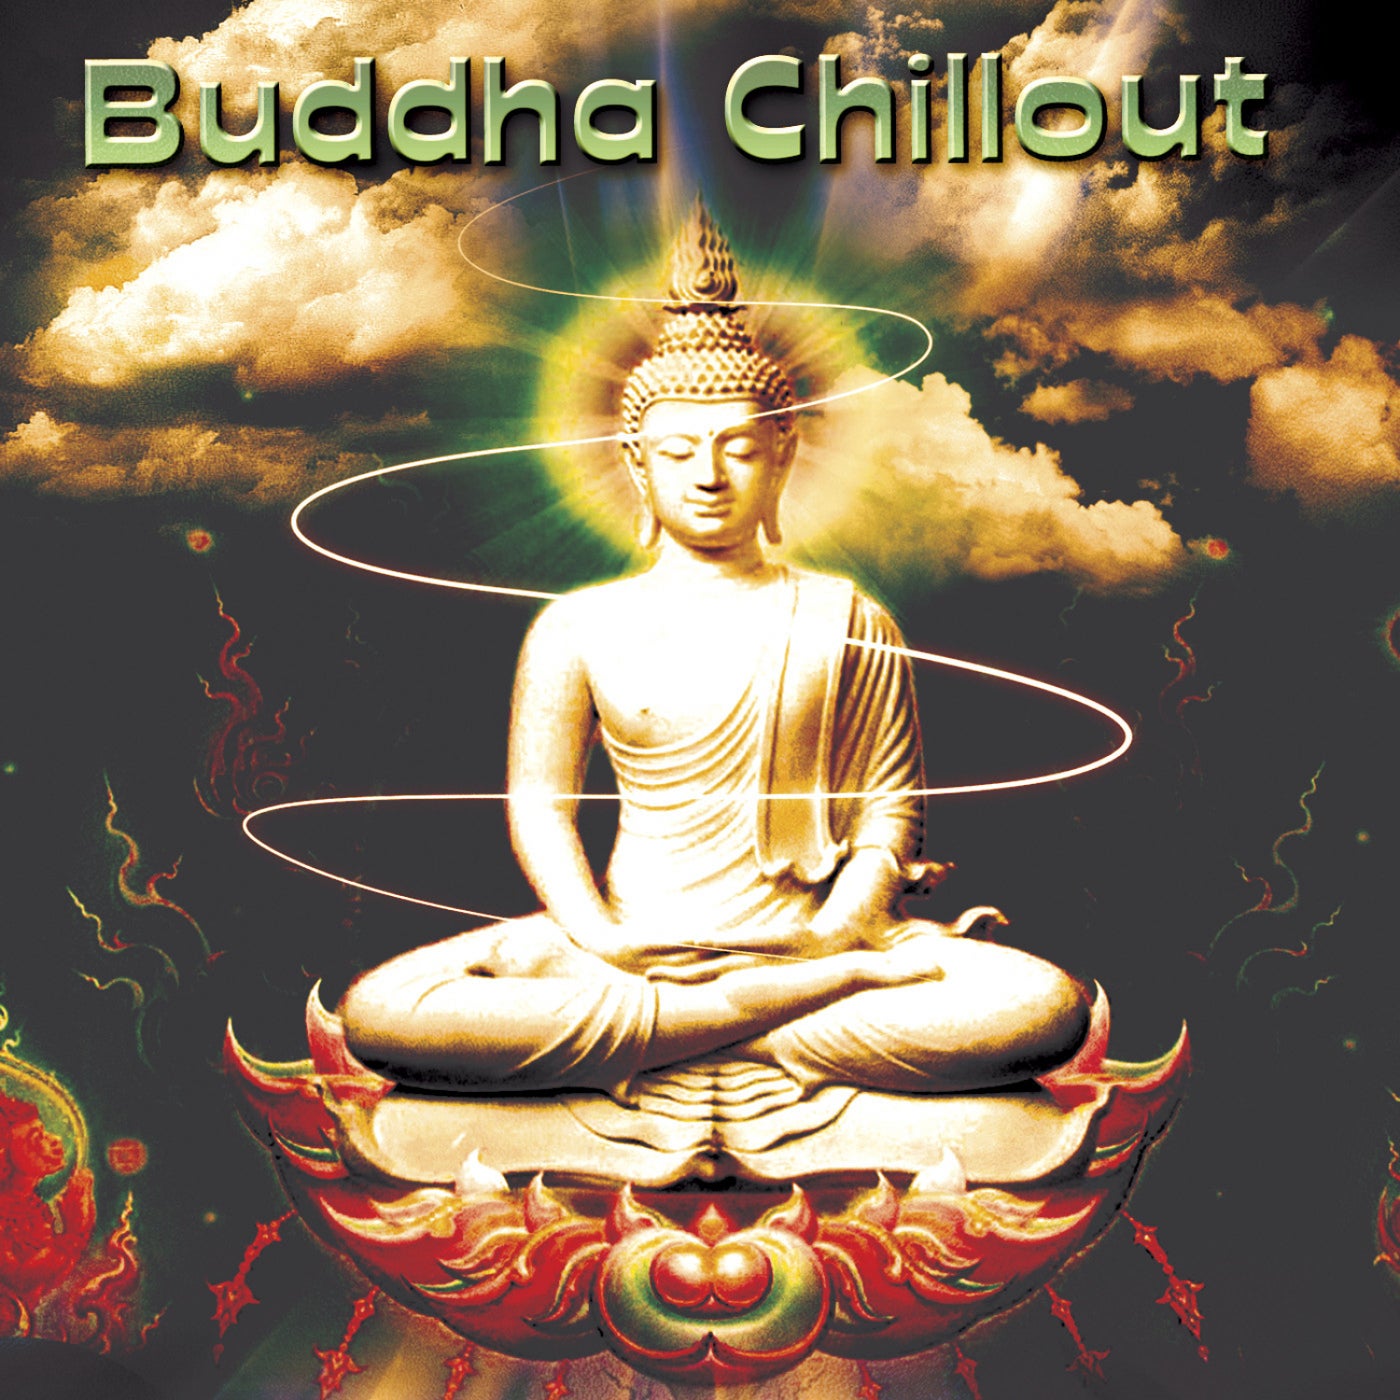 Chilling feeling. Будда свет. Chillout альбом Будда. Будда песня. Buddhist Chillout.